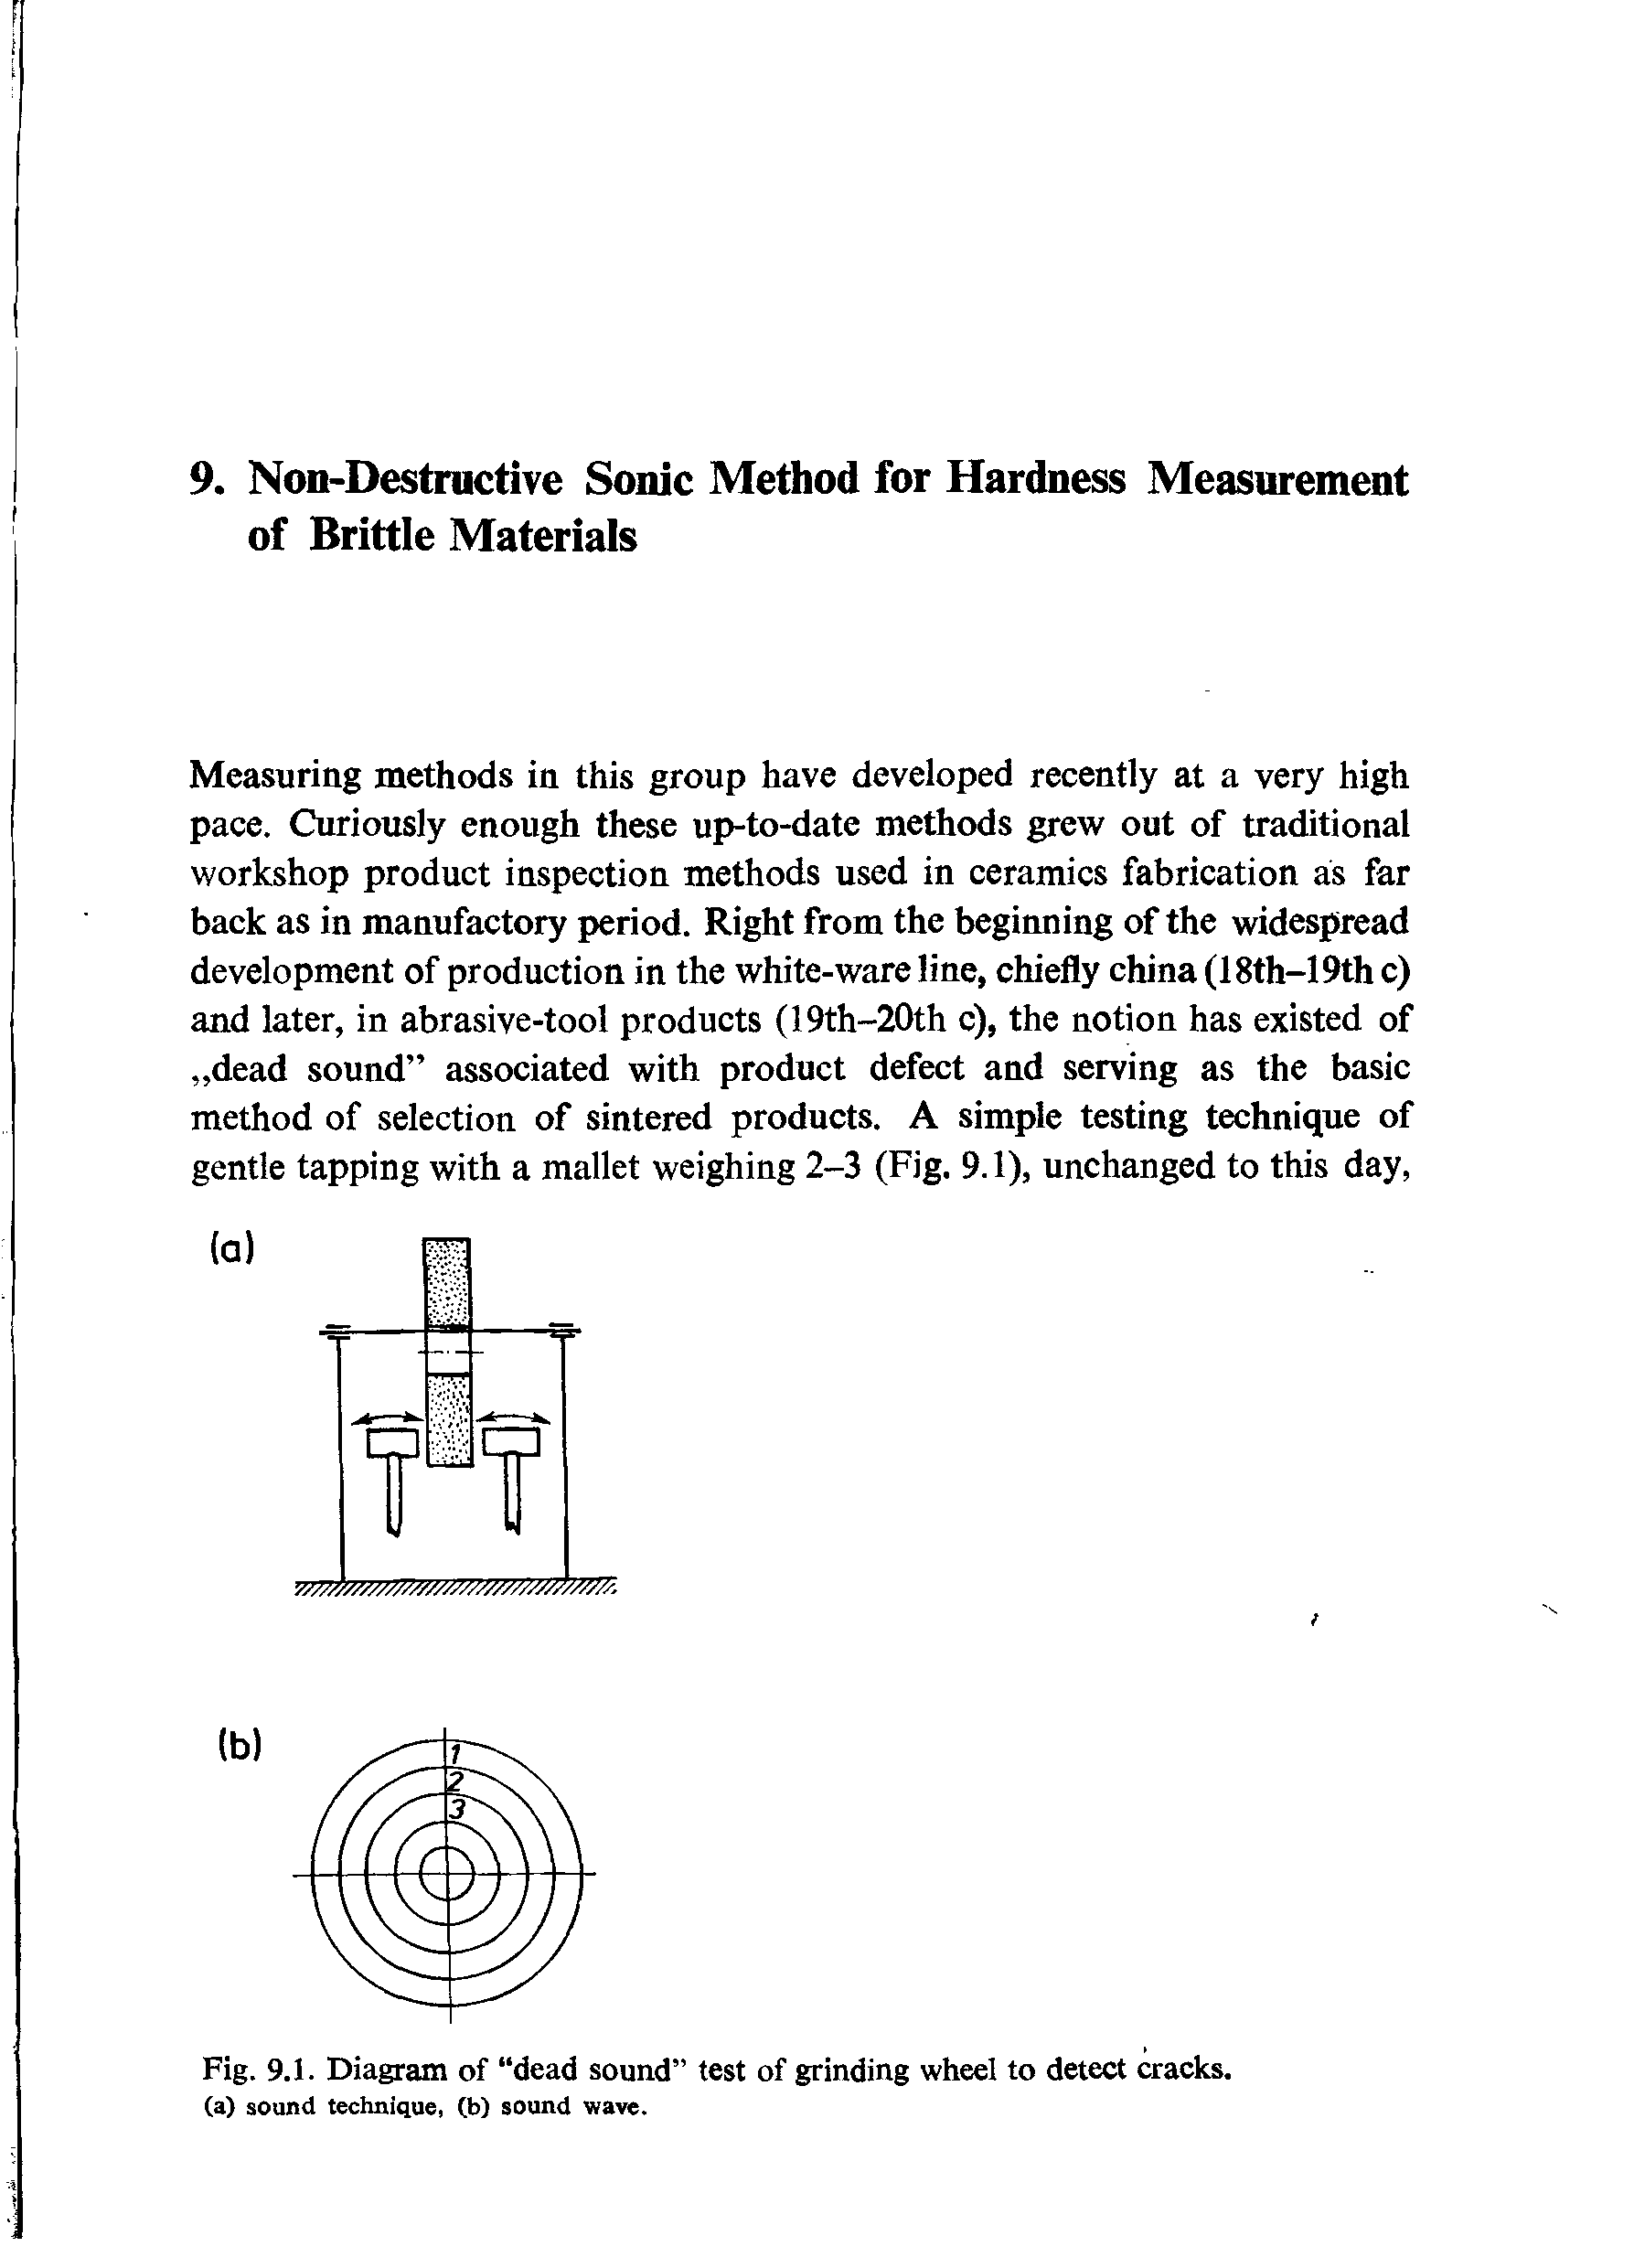 Fig. 9.1. Diagram of dead sound test of grinding wheel to detect cracks.